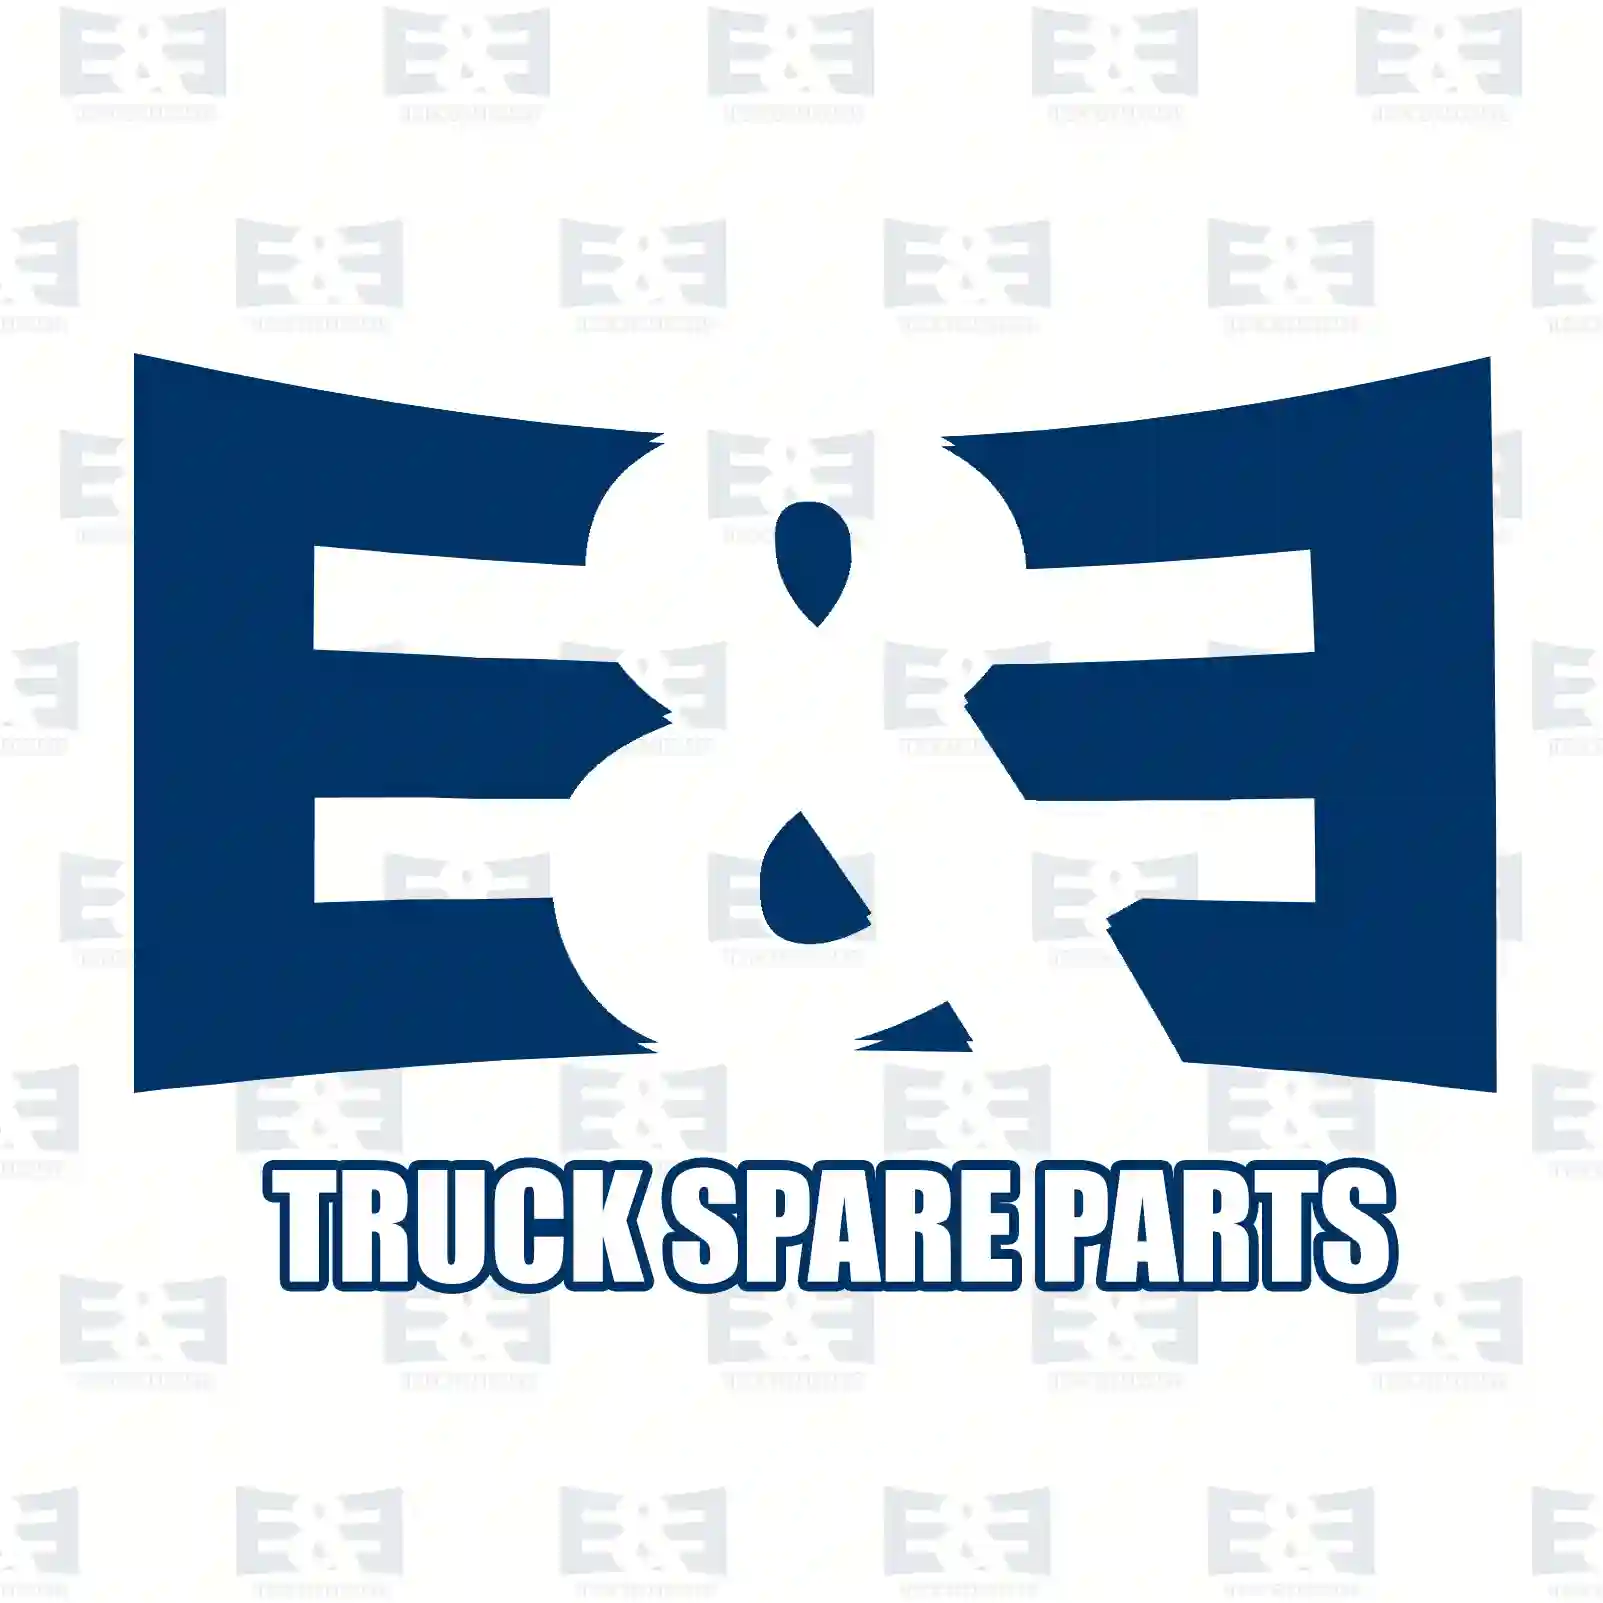 Cabin shock absorber, with air bellow, 2E2276576, 1117320, 1331620, 1348117, 370227, 393257, ZG41205-0008 ||  2E2276576 E&E Truck Spare Parts | Truck Spare Parts, Auotomotive Spare Parts Cabin shock absorber, with air bellow, 2E2276576, 1117320, 1331620, 1348117, 370227, 393257, ZG41205-0008 ||  2E2276576 E&E Truck Spare Parts | Truck Spare Parts, Auotomotive Spare Parts